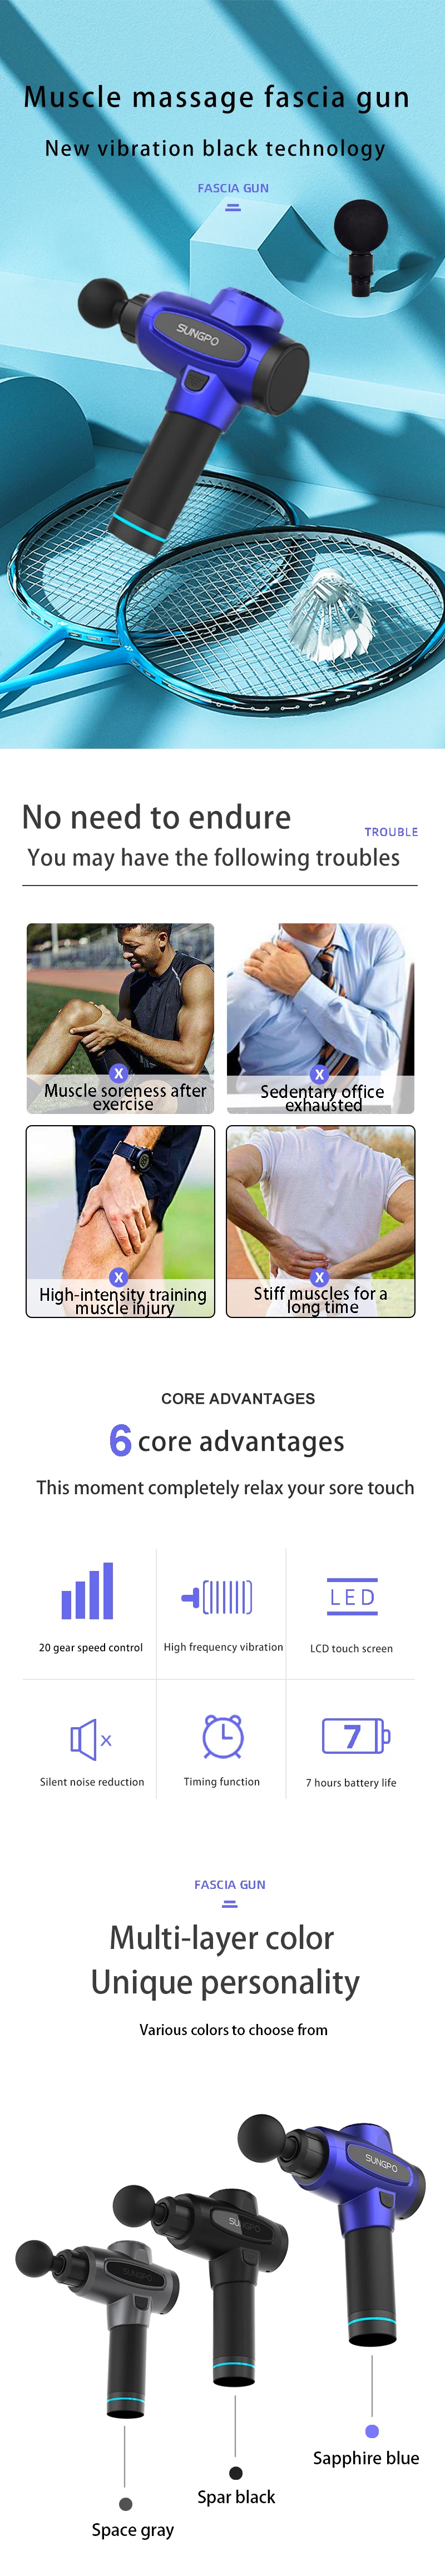 professional handheld fitness exercise massage equipment vibration muscle massage gun